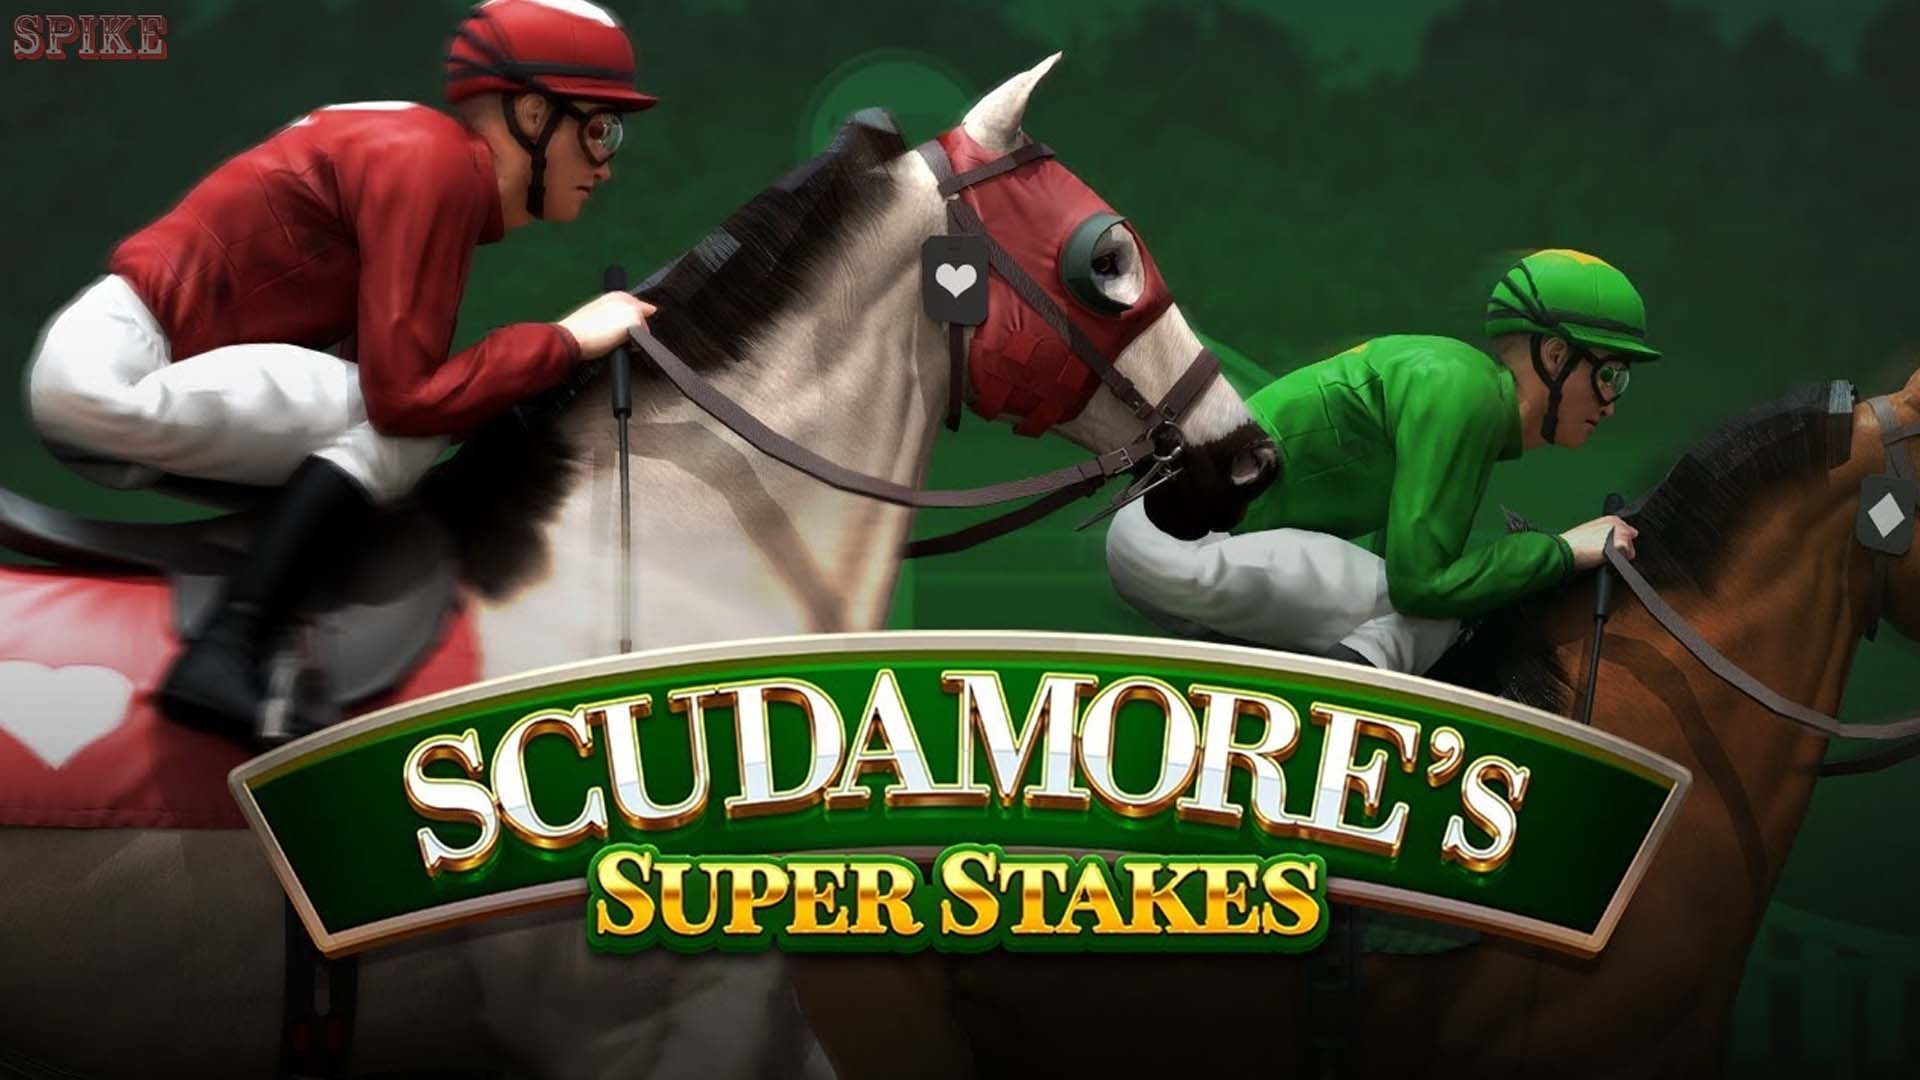 Scudamore's Super Stakes Slot